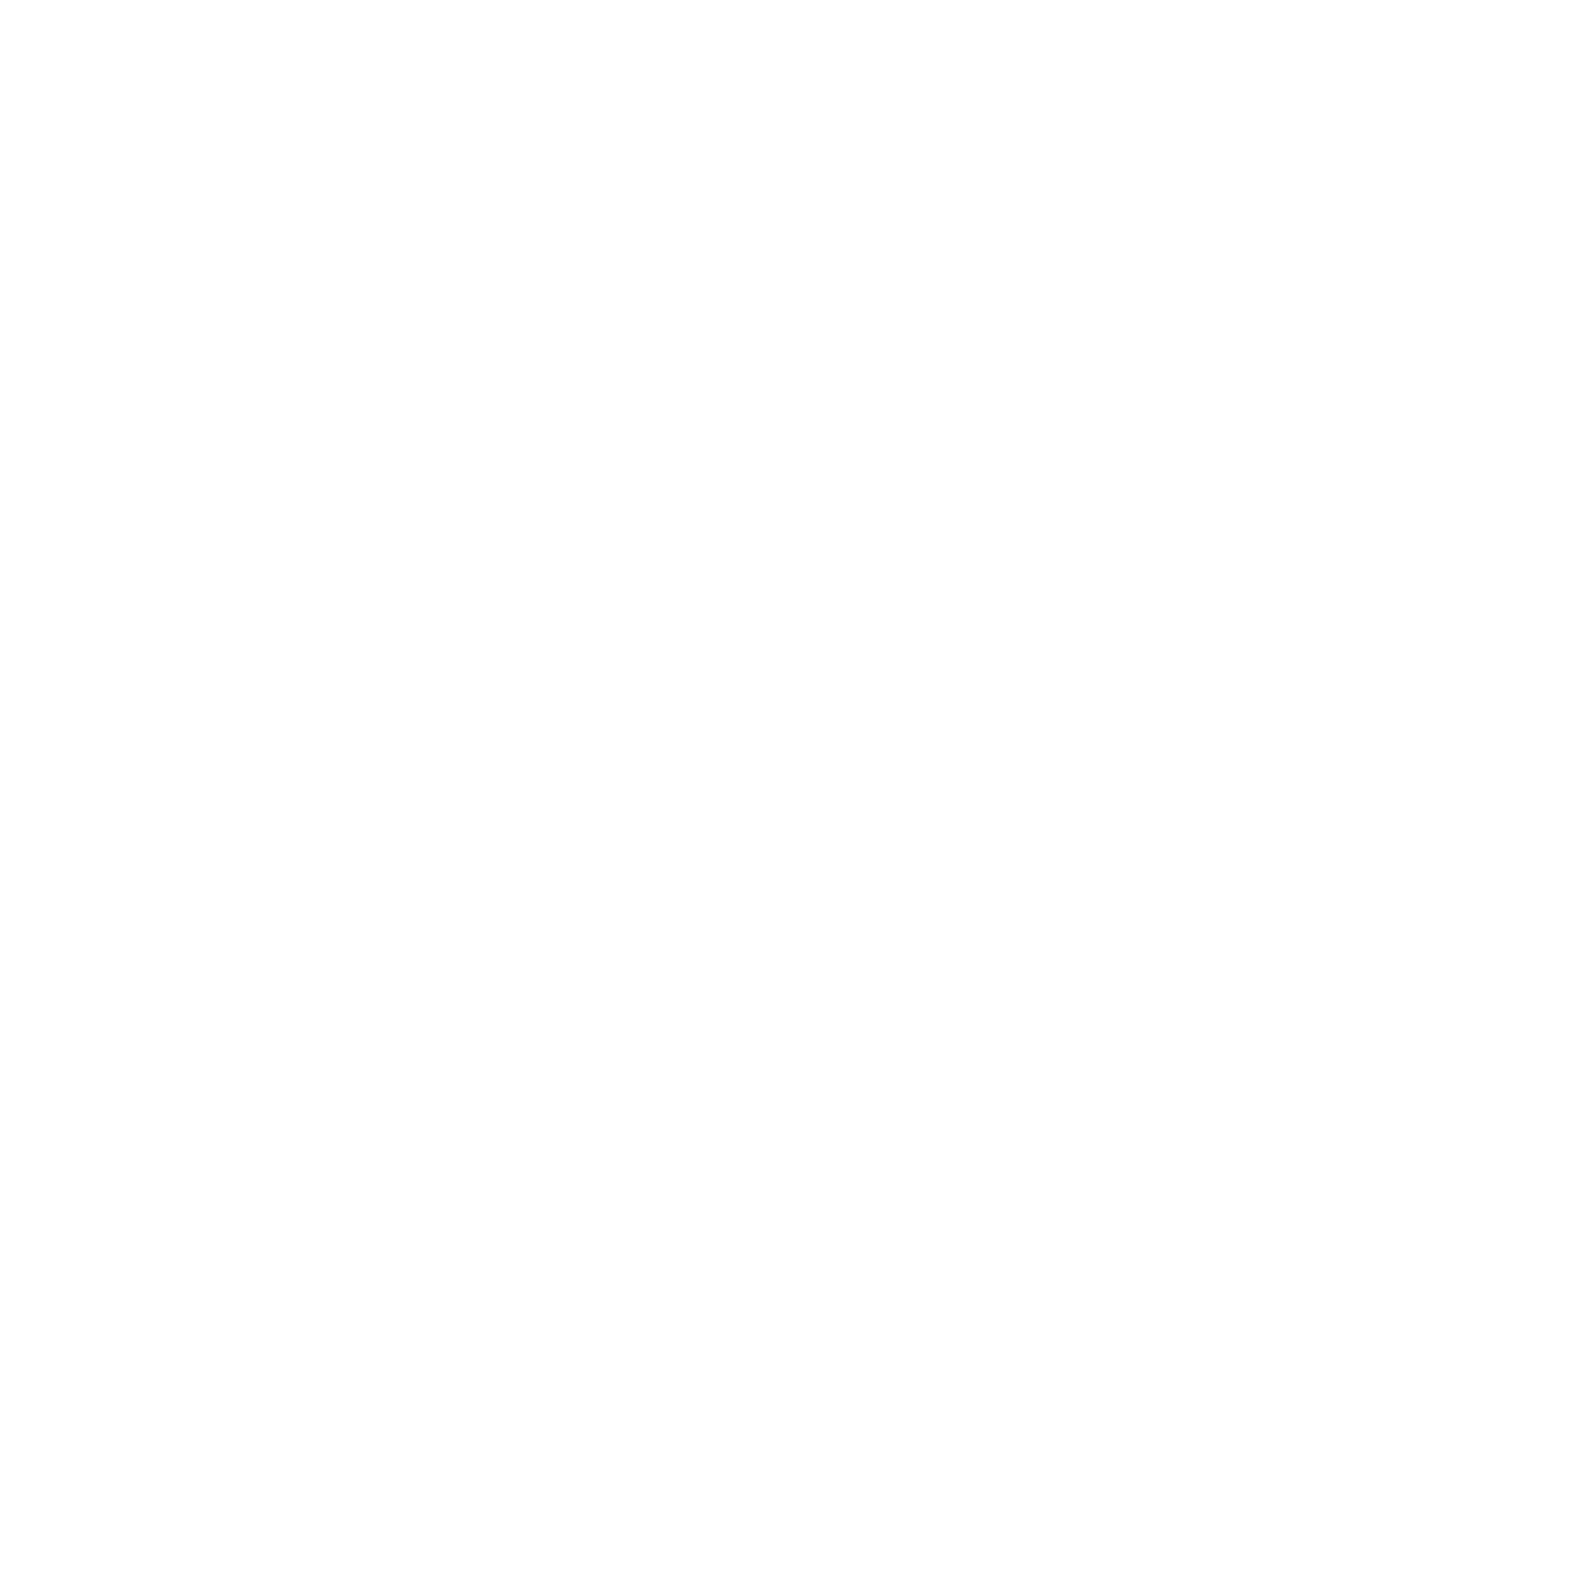 G5 Entertainment logo for dark backgrounds (transparent PNG)